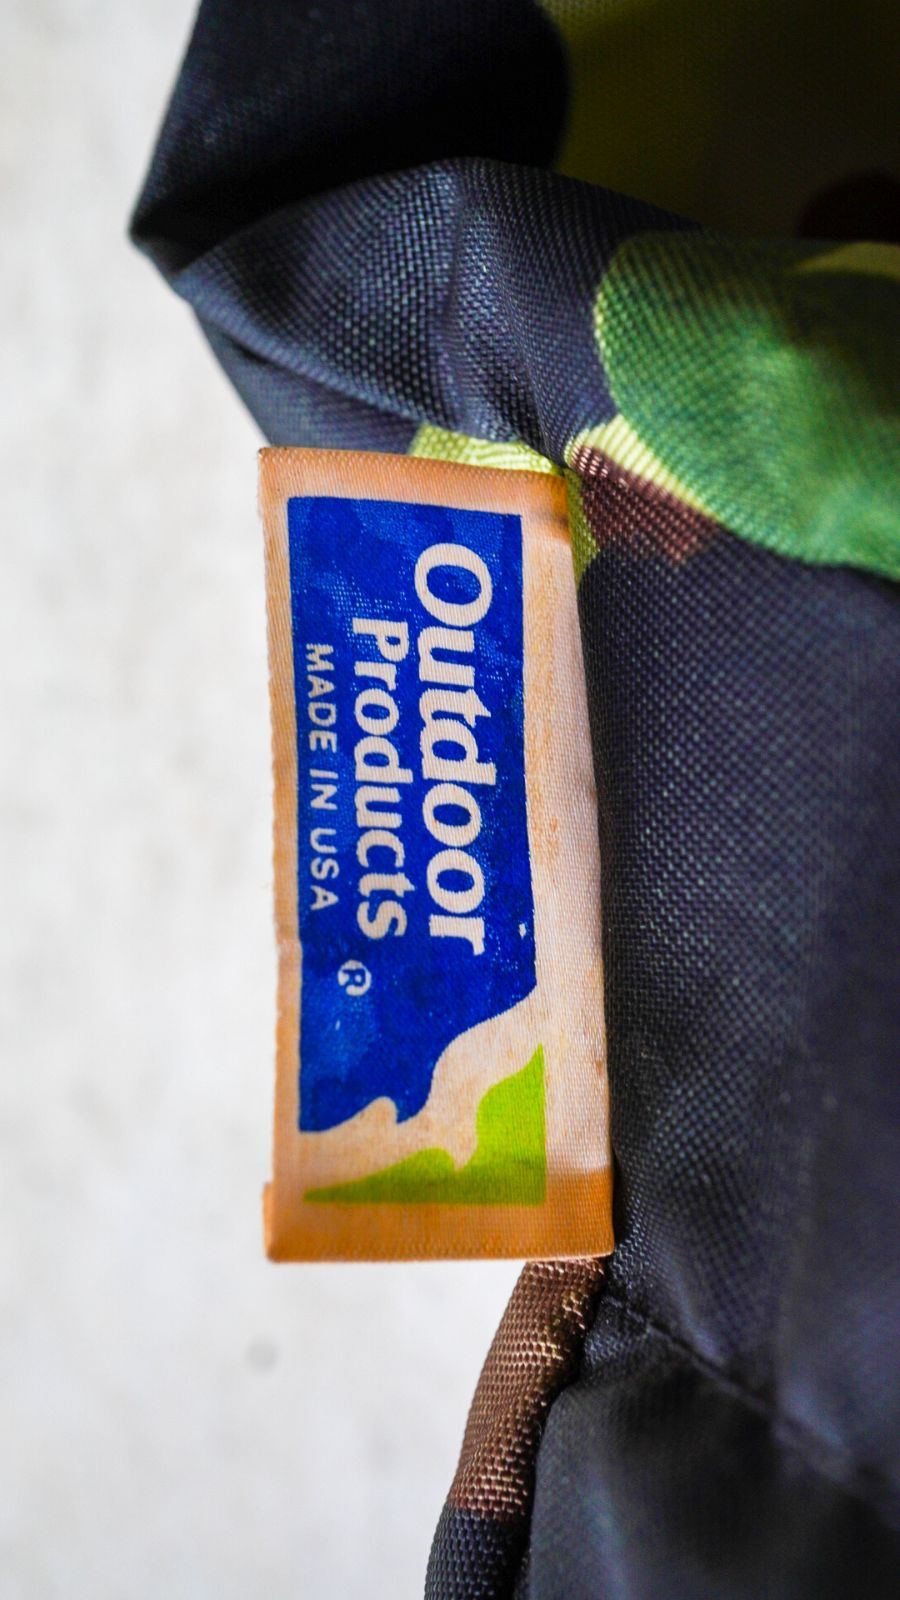 【1980s】OUTDOOR PRODUCTS アウトドアプロダクツ ダックハンターカモ ウエスト バッグ《旧タグ カモフラージュ 迷彩 USA製  ヴィンテージ ビンテージ》